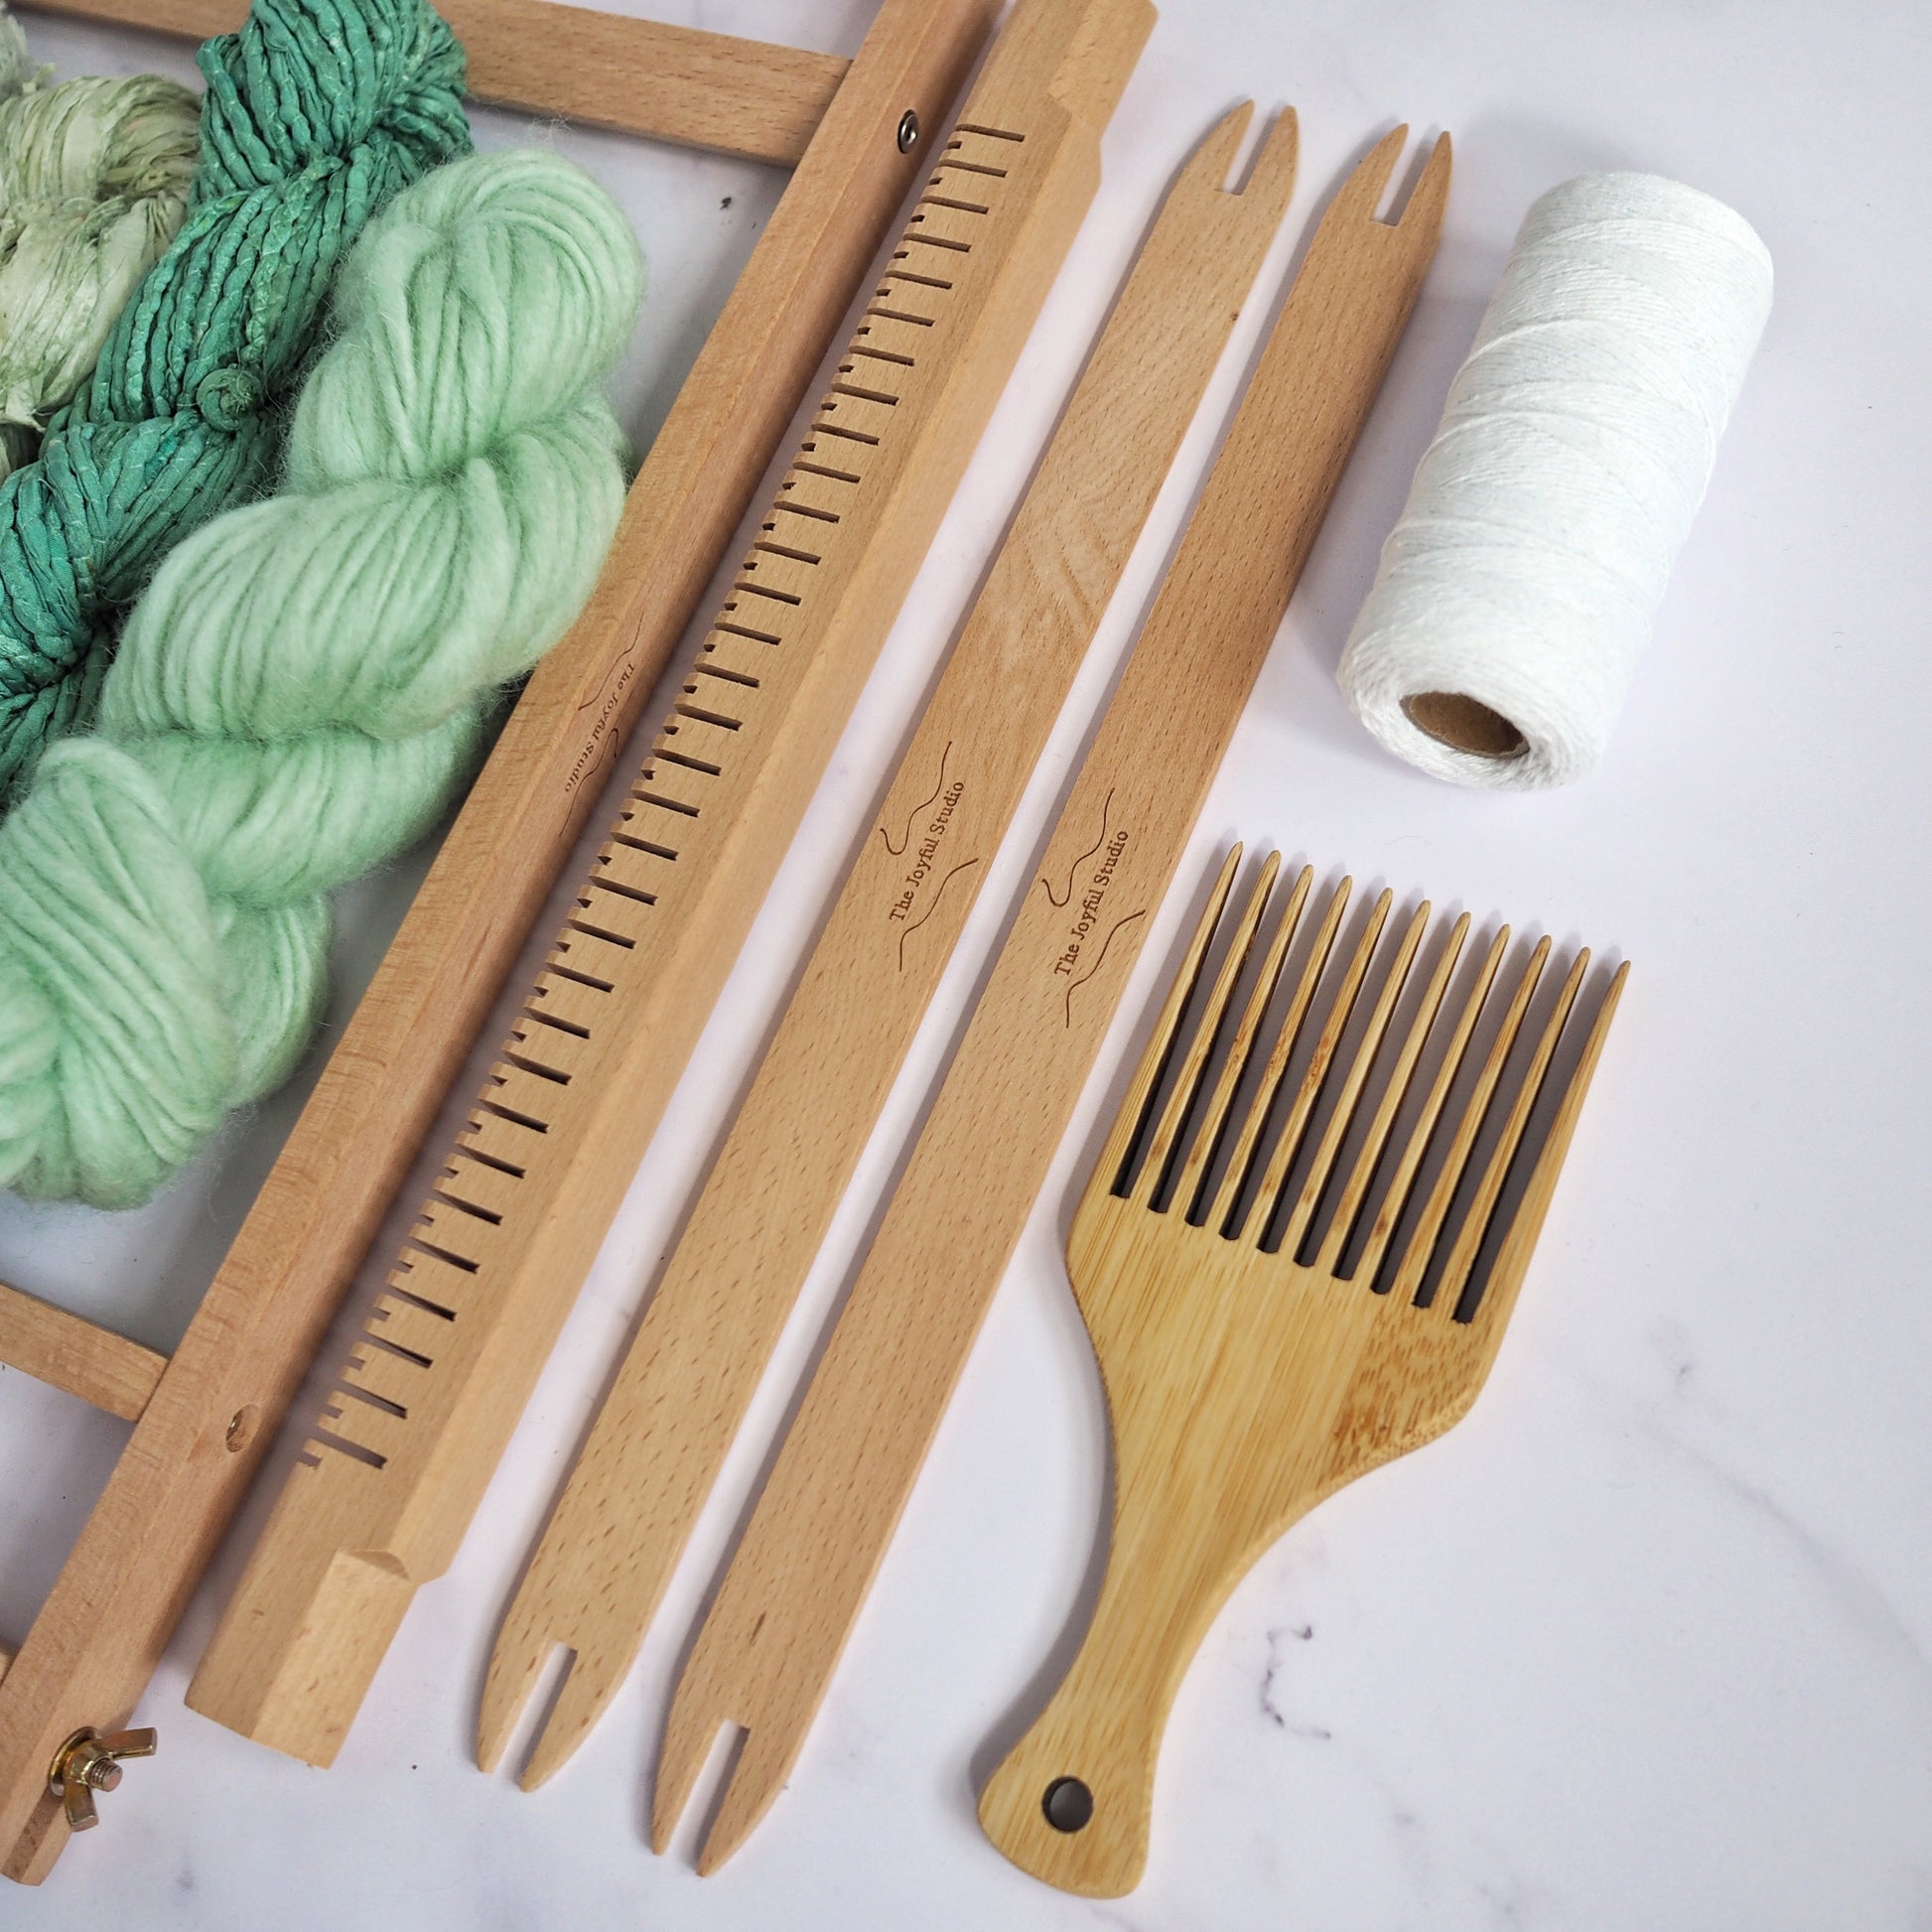 Weaving Project Kit - 'Soft Green' The Joyful Studio